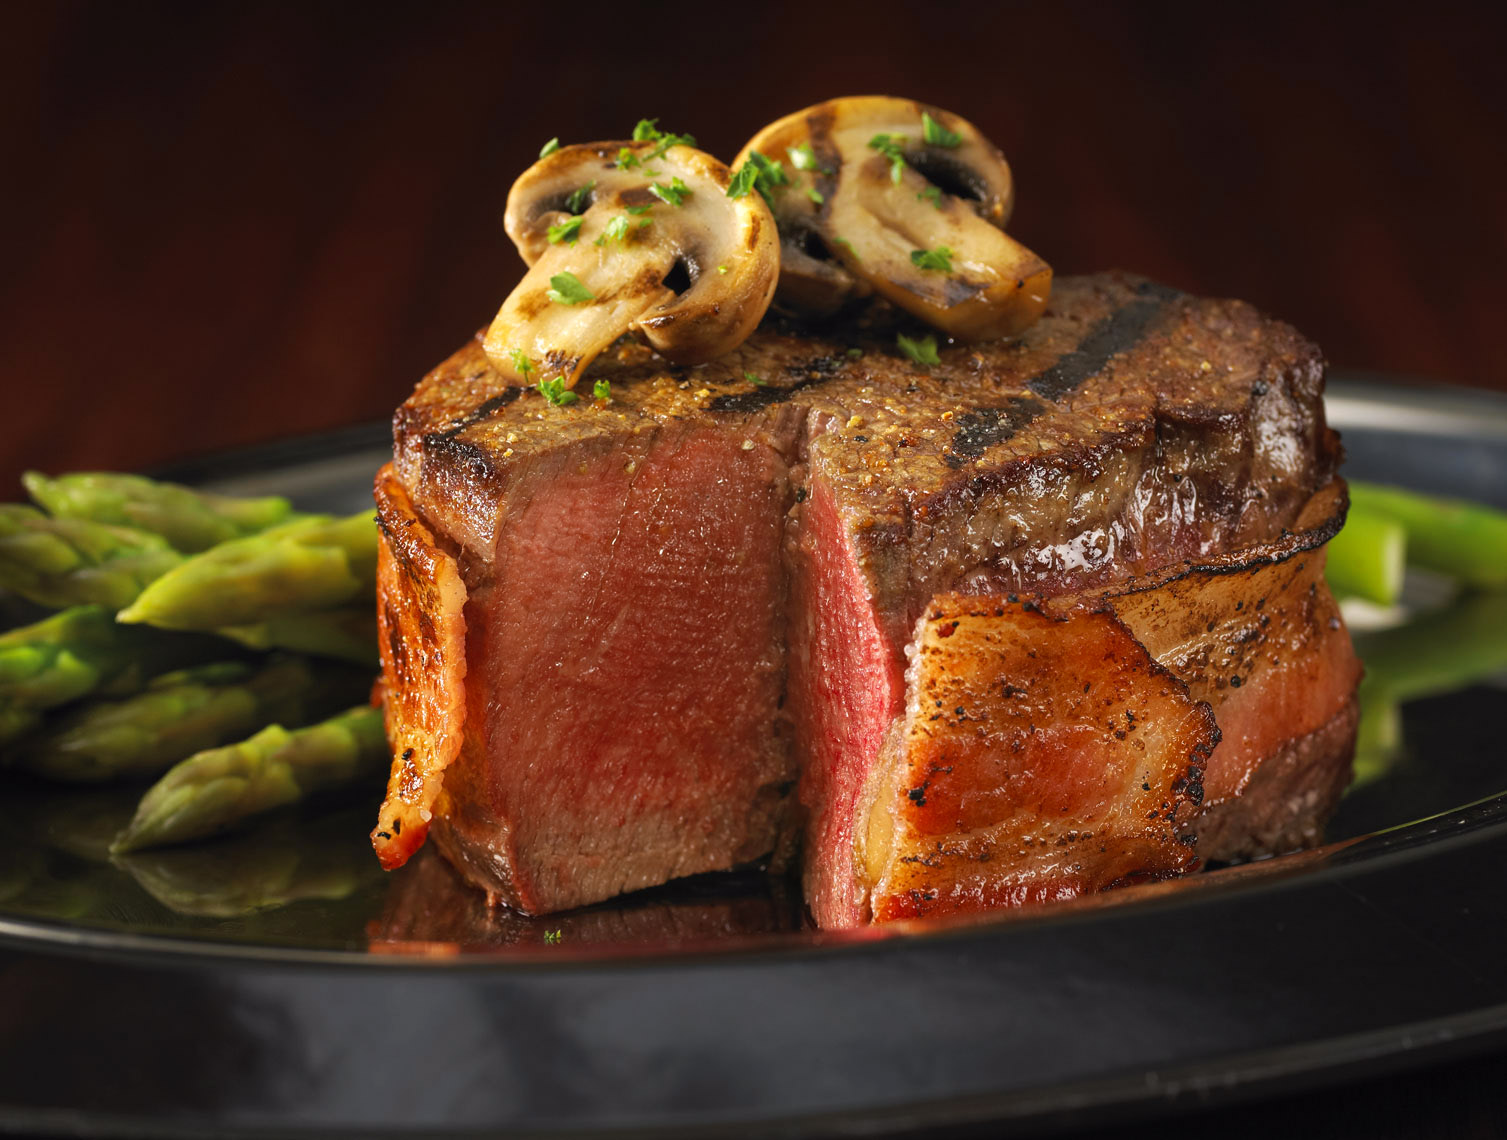 Steak fillet/asparagus/mushrooms/food photography